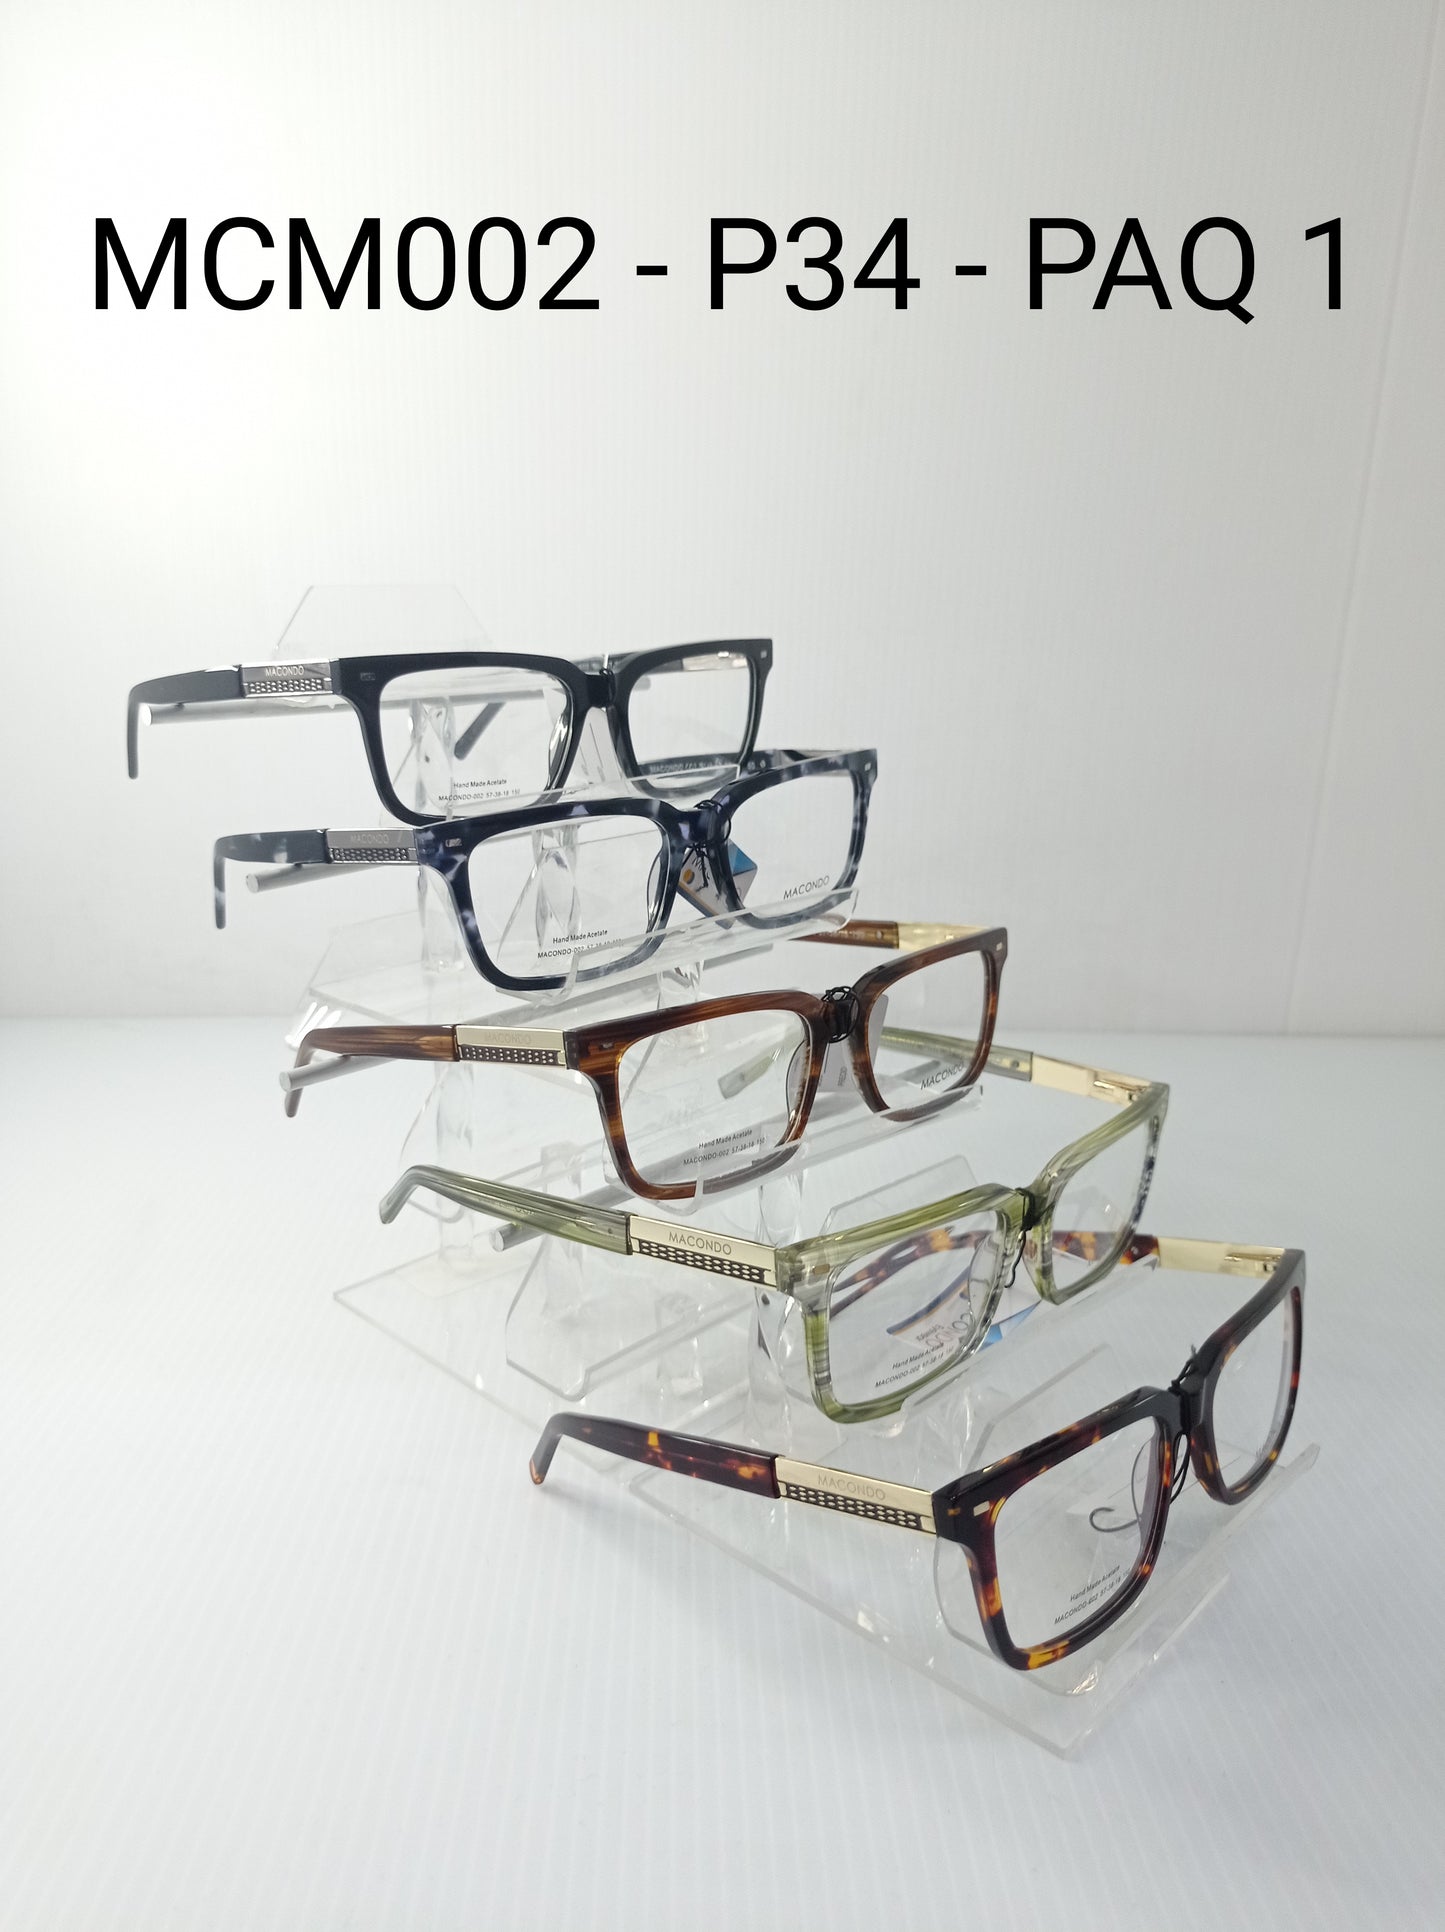 MACONDO - MCM002 - P34